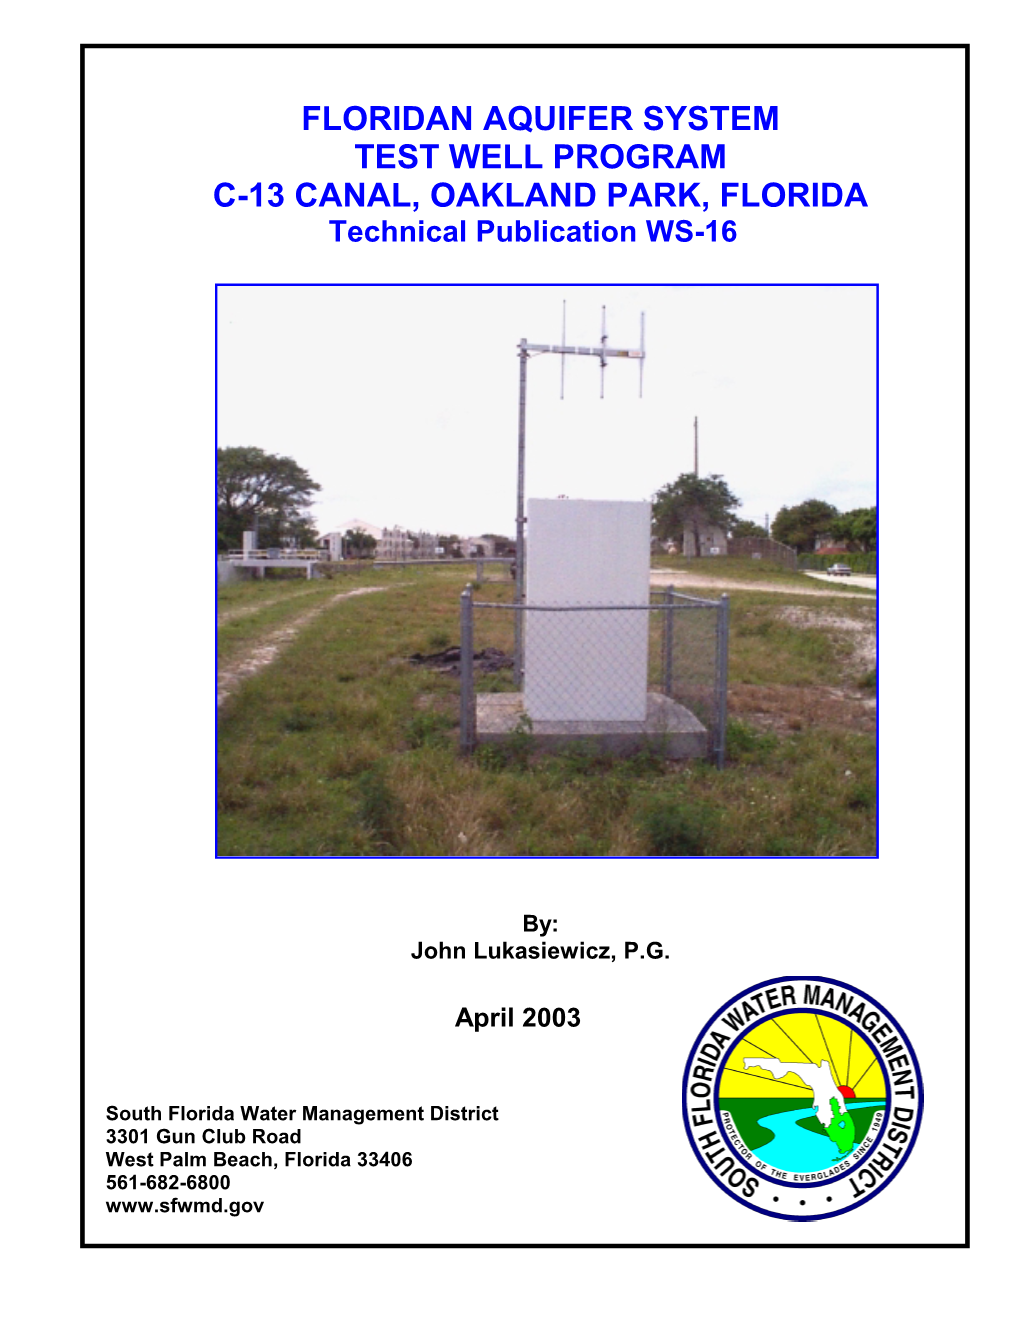 FLORIDAN AQUIFER SYSTEM TEST WELL PROGRAM C-13 CANAL, OAKLAND PARK, FLORIDA Technical Publication WS-16